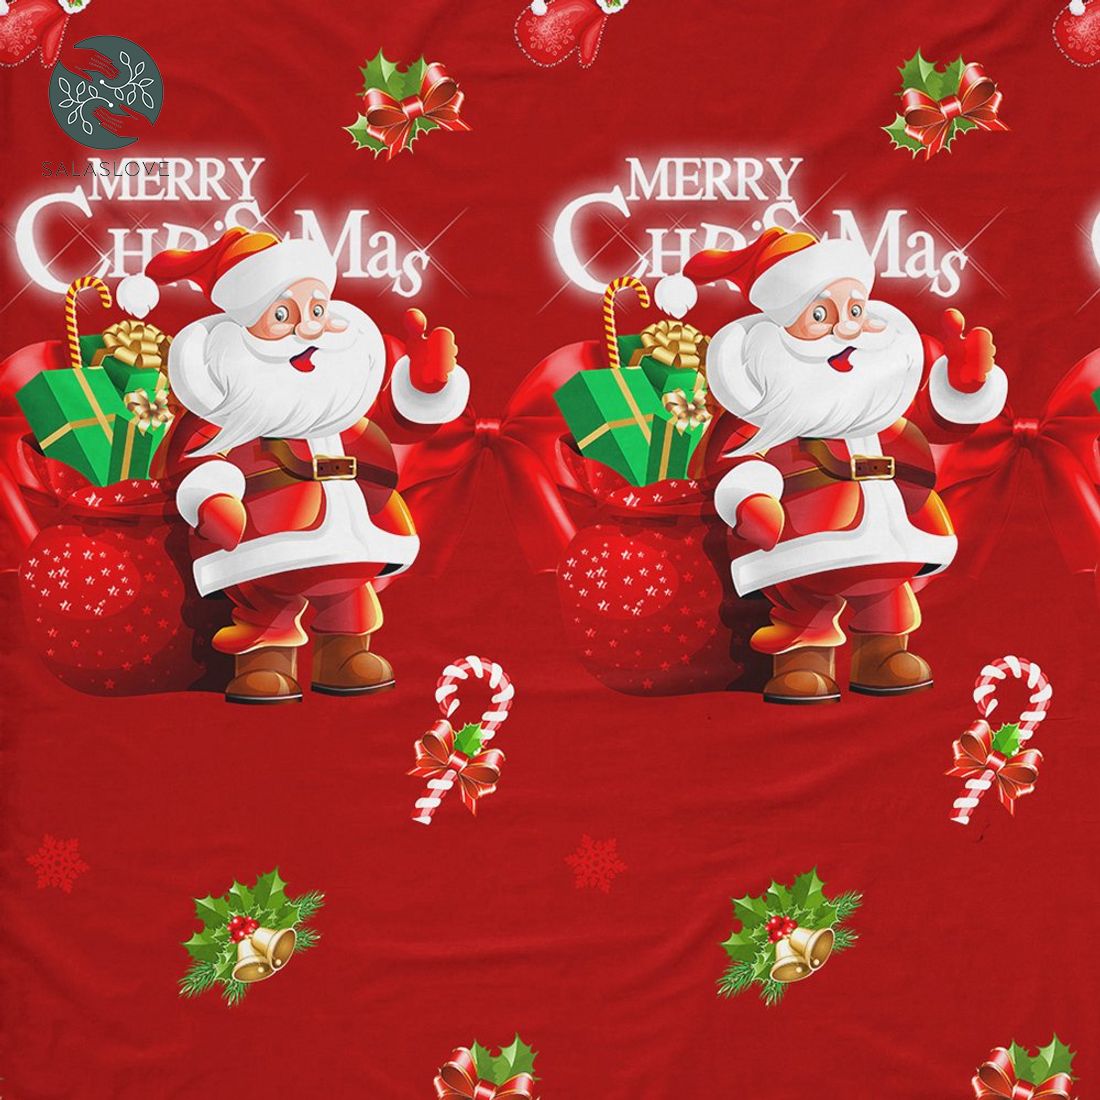 Christmas Santa Bedding Set Polyester 3D